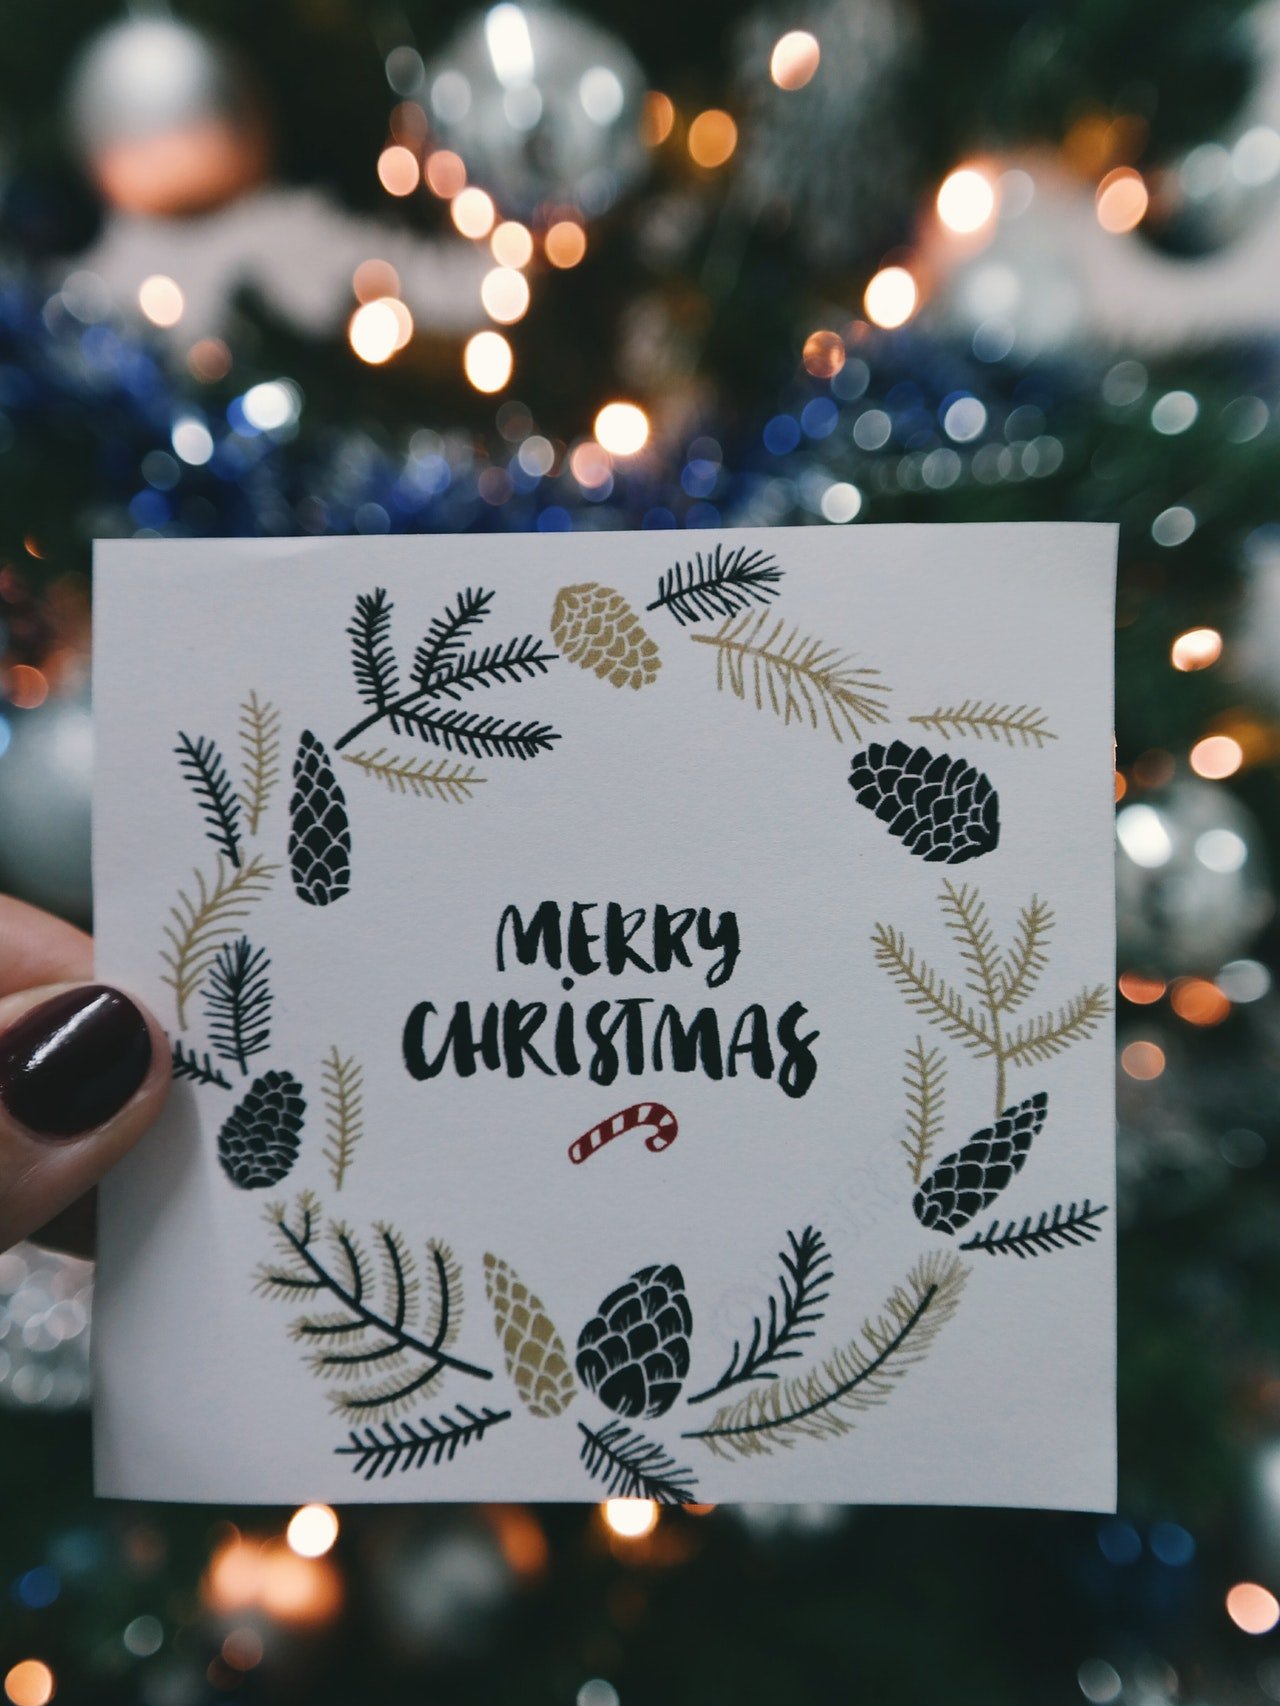 Merry Christmas card | Source: Pexels